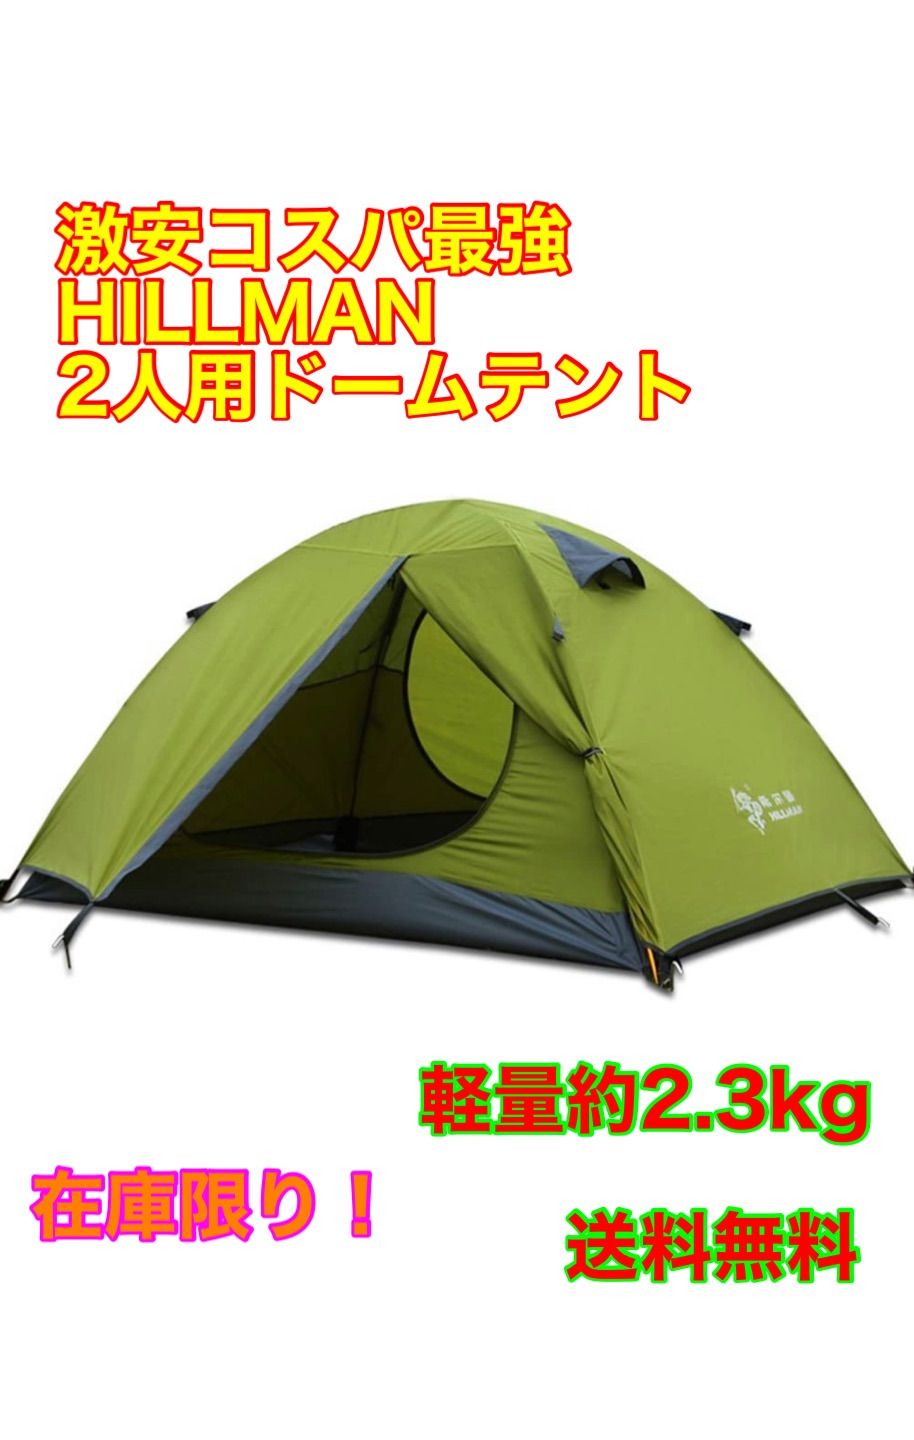 HILLMAN ソロテント 登山.ツーリング セールアイテム www.villademar.com